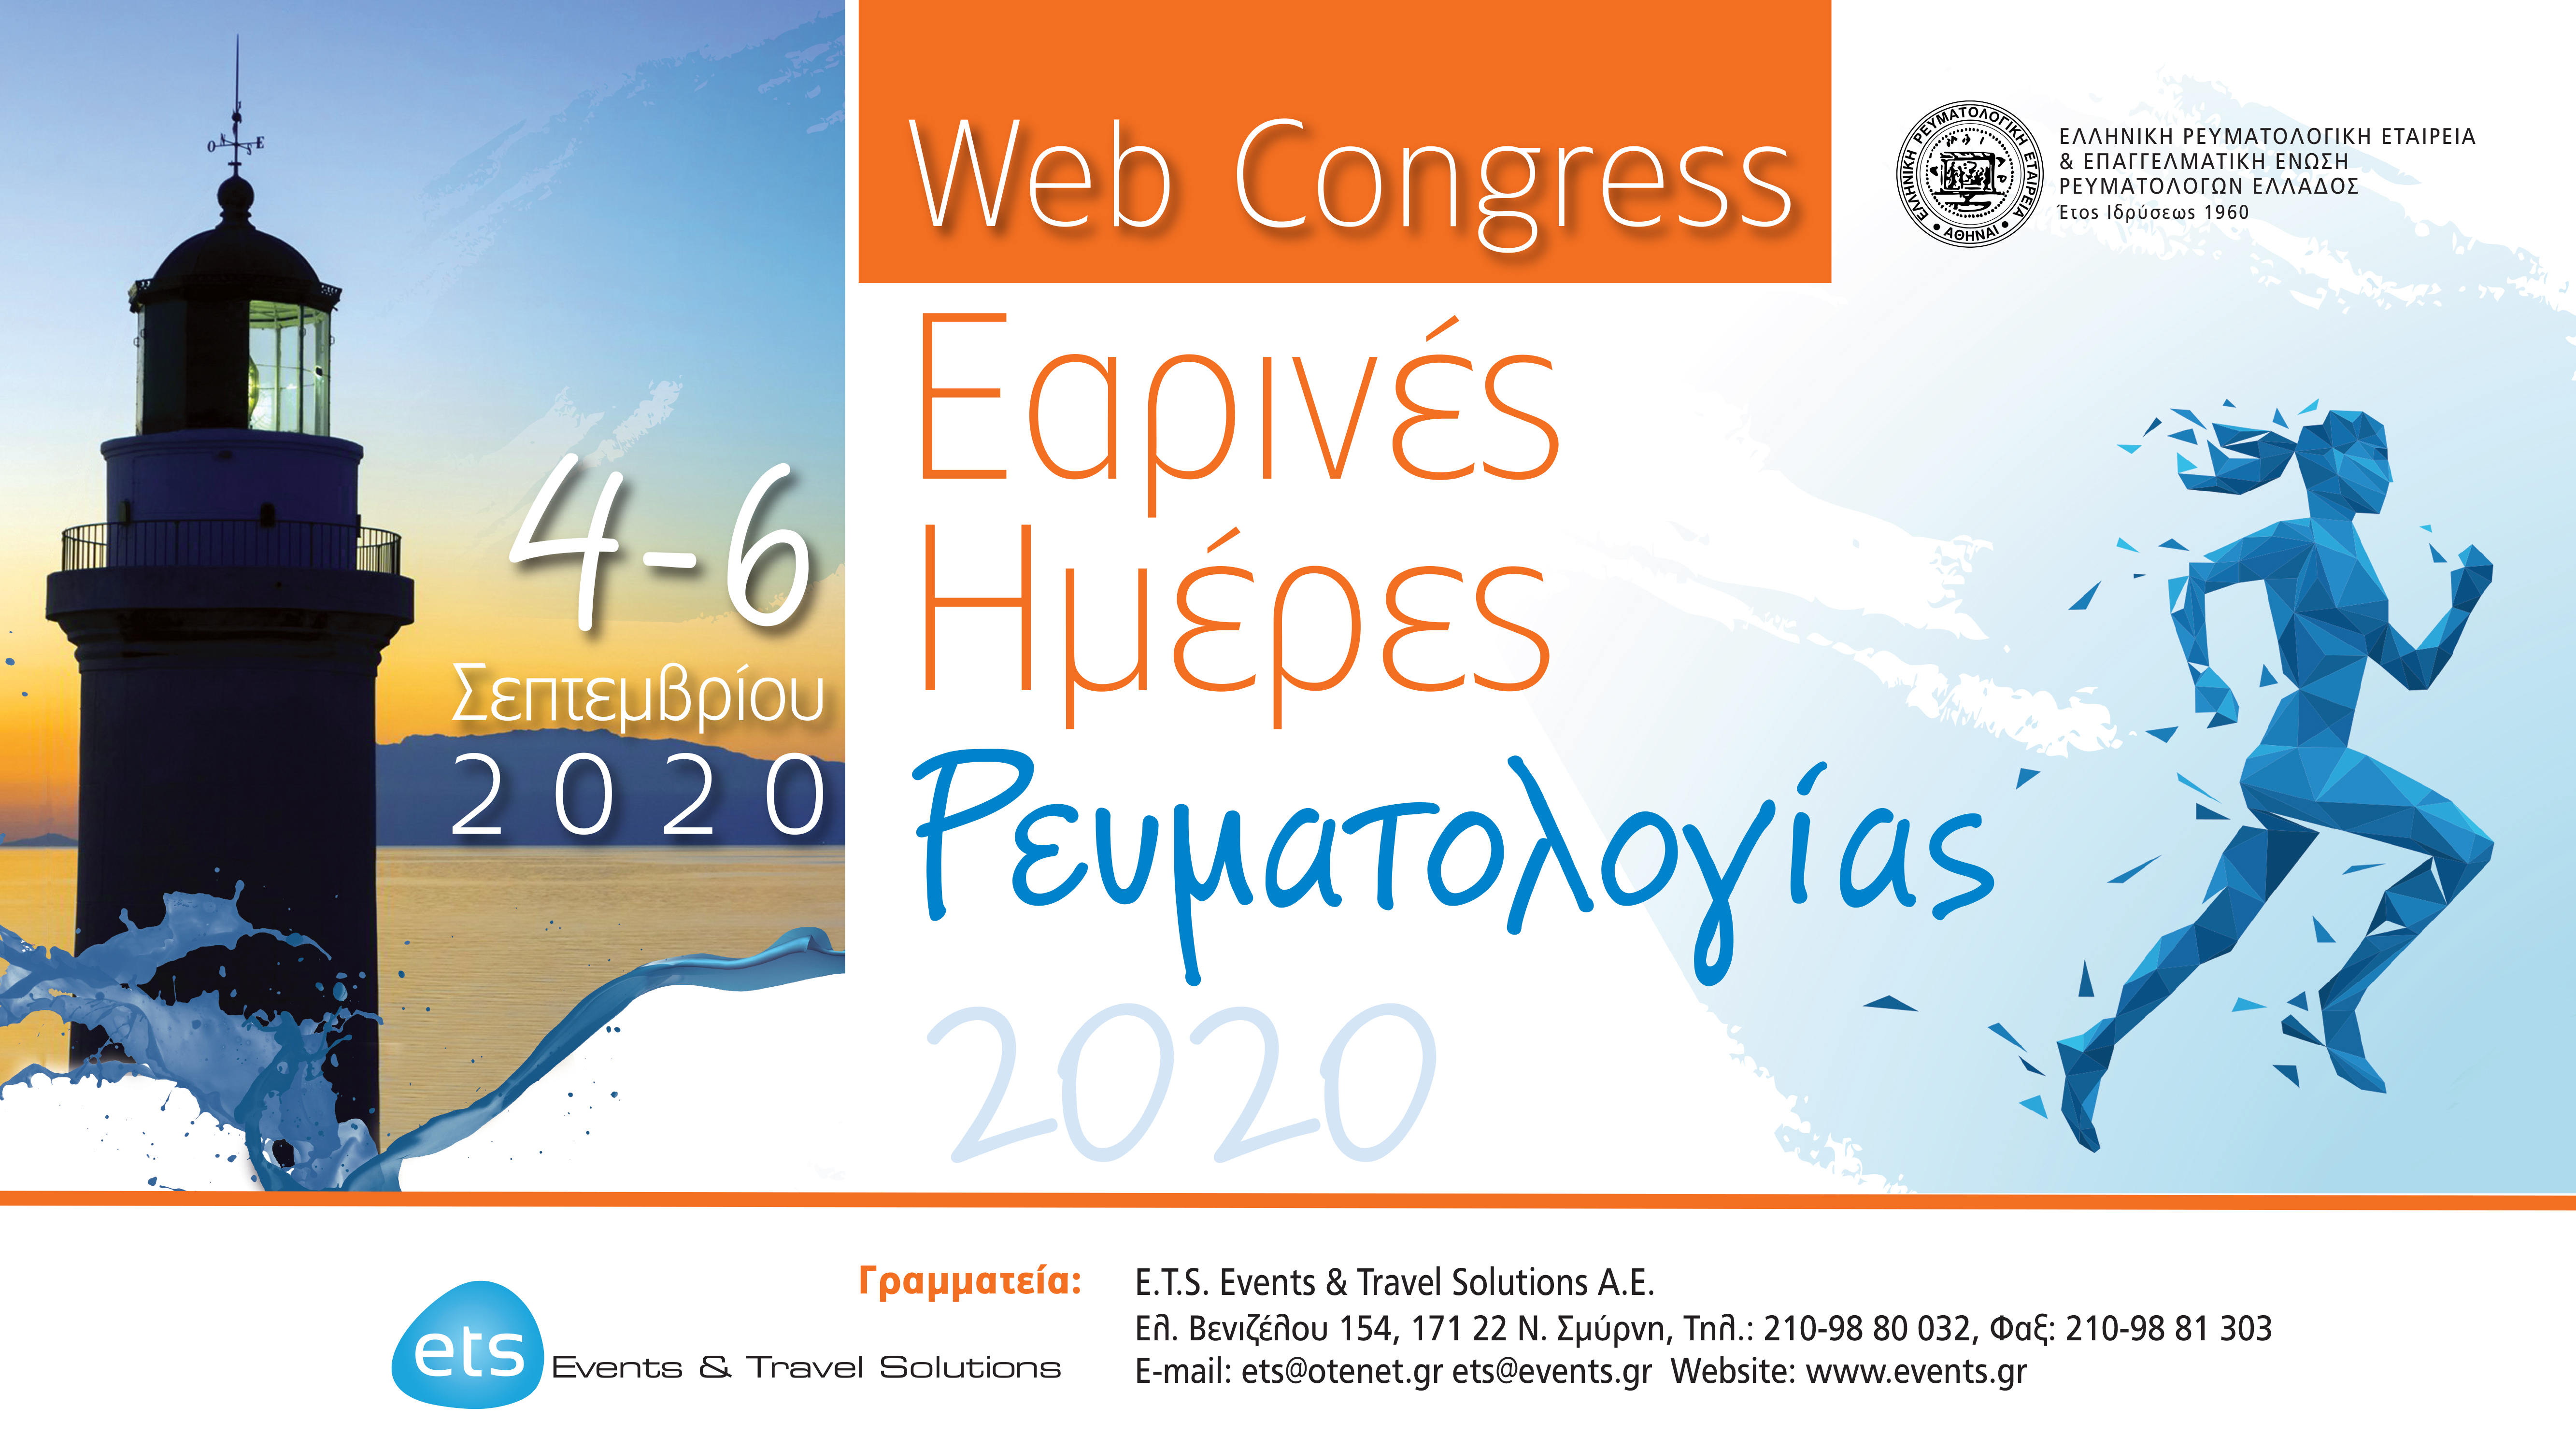 Web Congress: Εαρινές Ημέρες Ρευματολογίας 2020